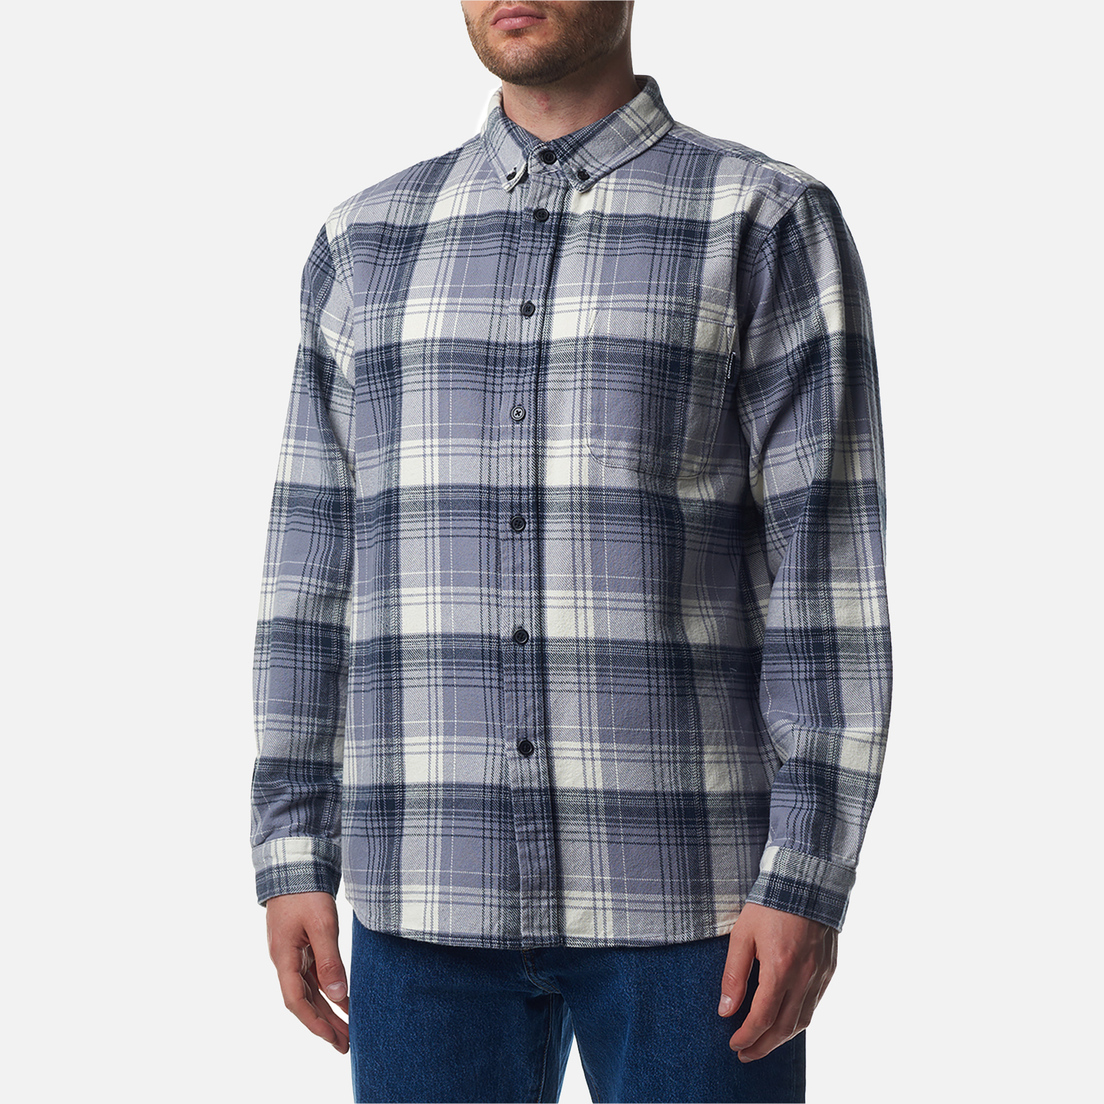 GX1000 Мужская рубашка Flannel Button Down